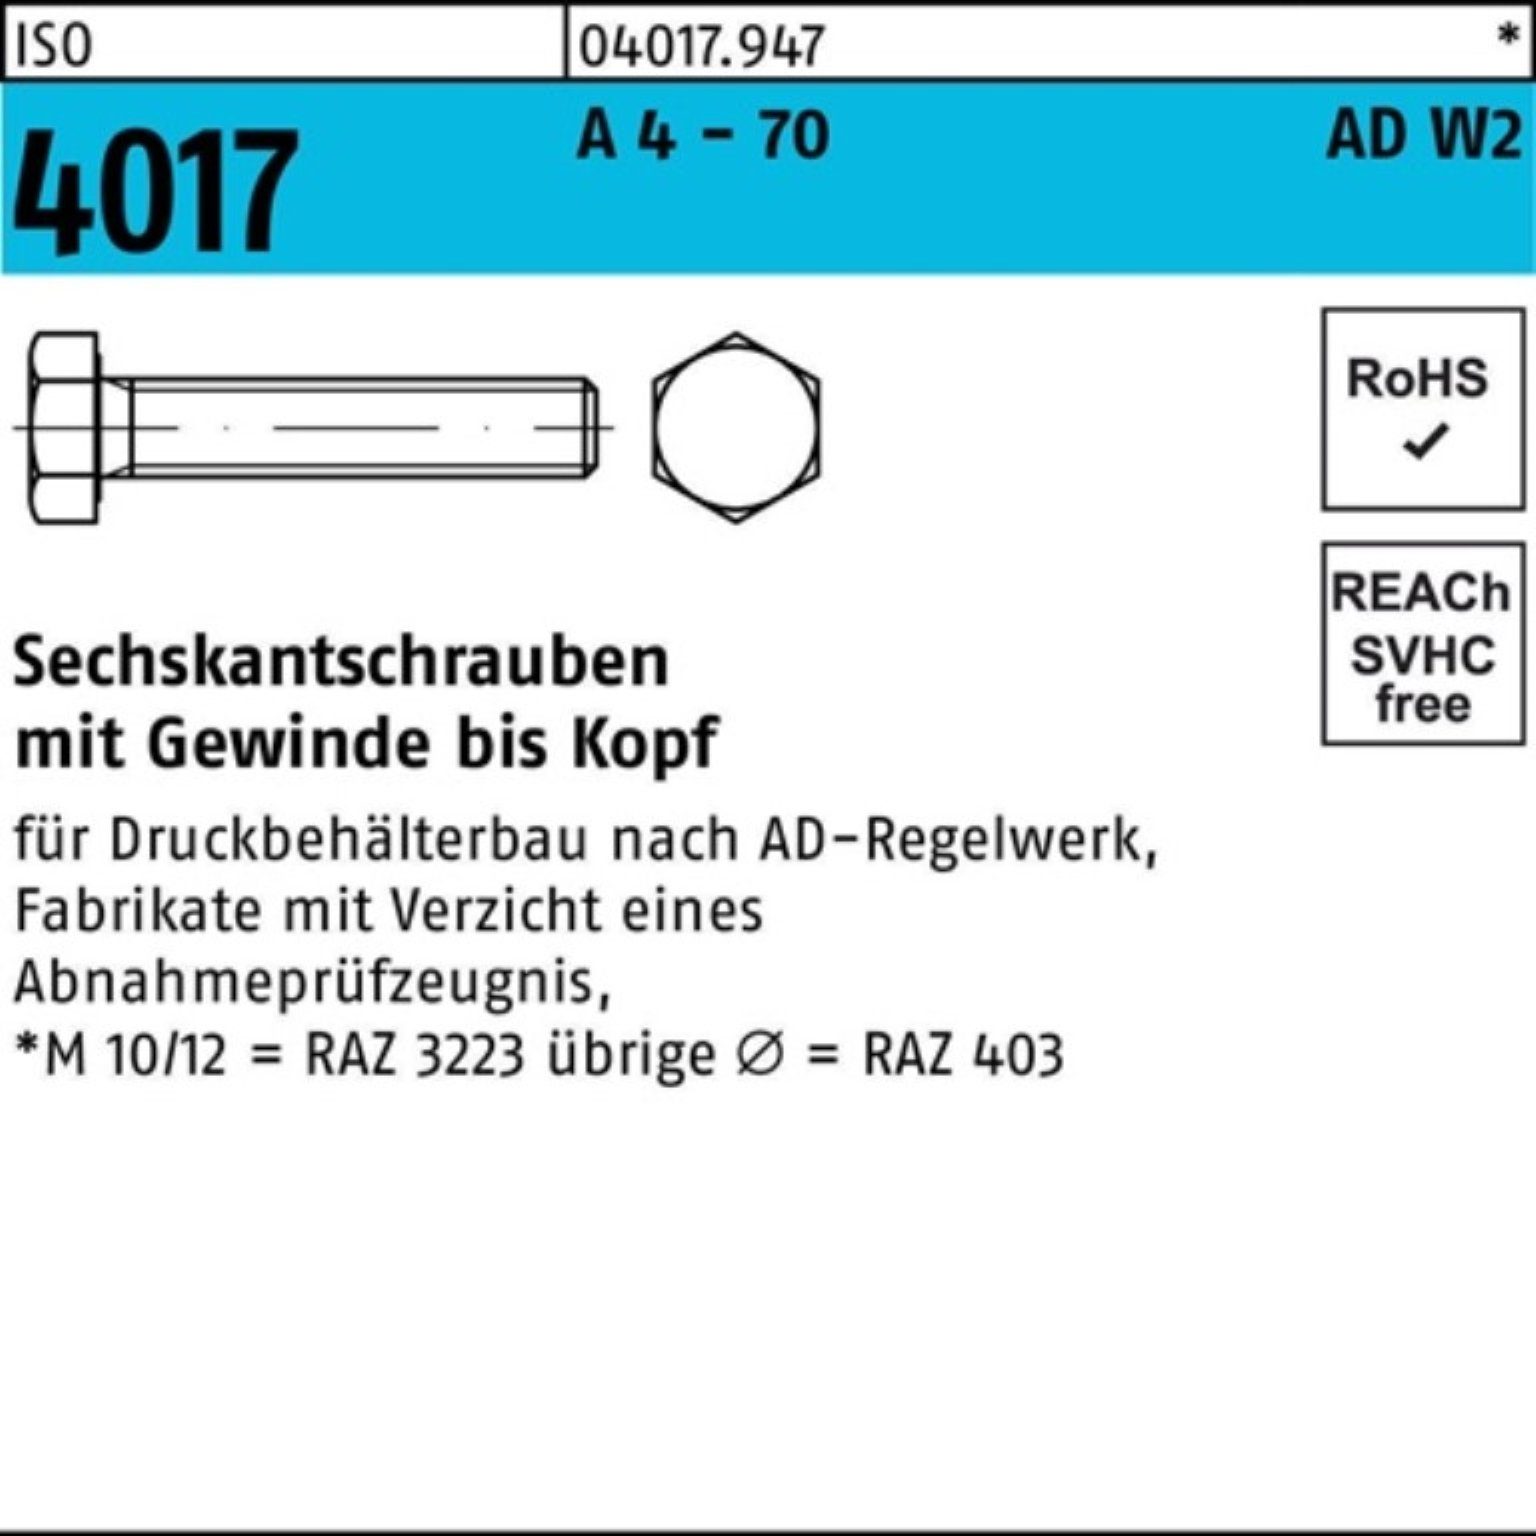 Bufab Sechskantschraube 200er Pack Sechskantschraube ISO 4017 VG M6x 8 A 4 - 70 AD-W2 200 Stü